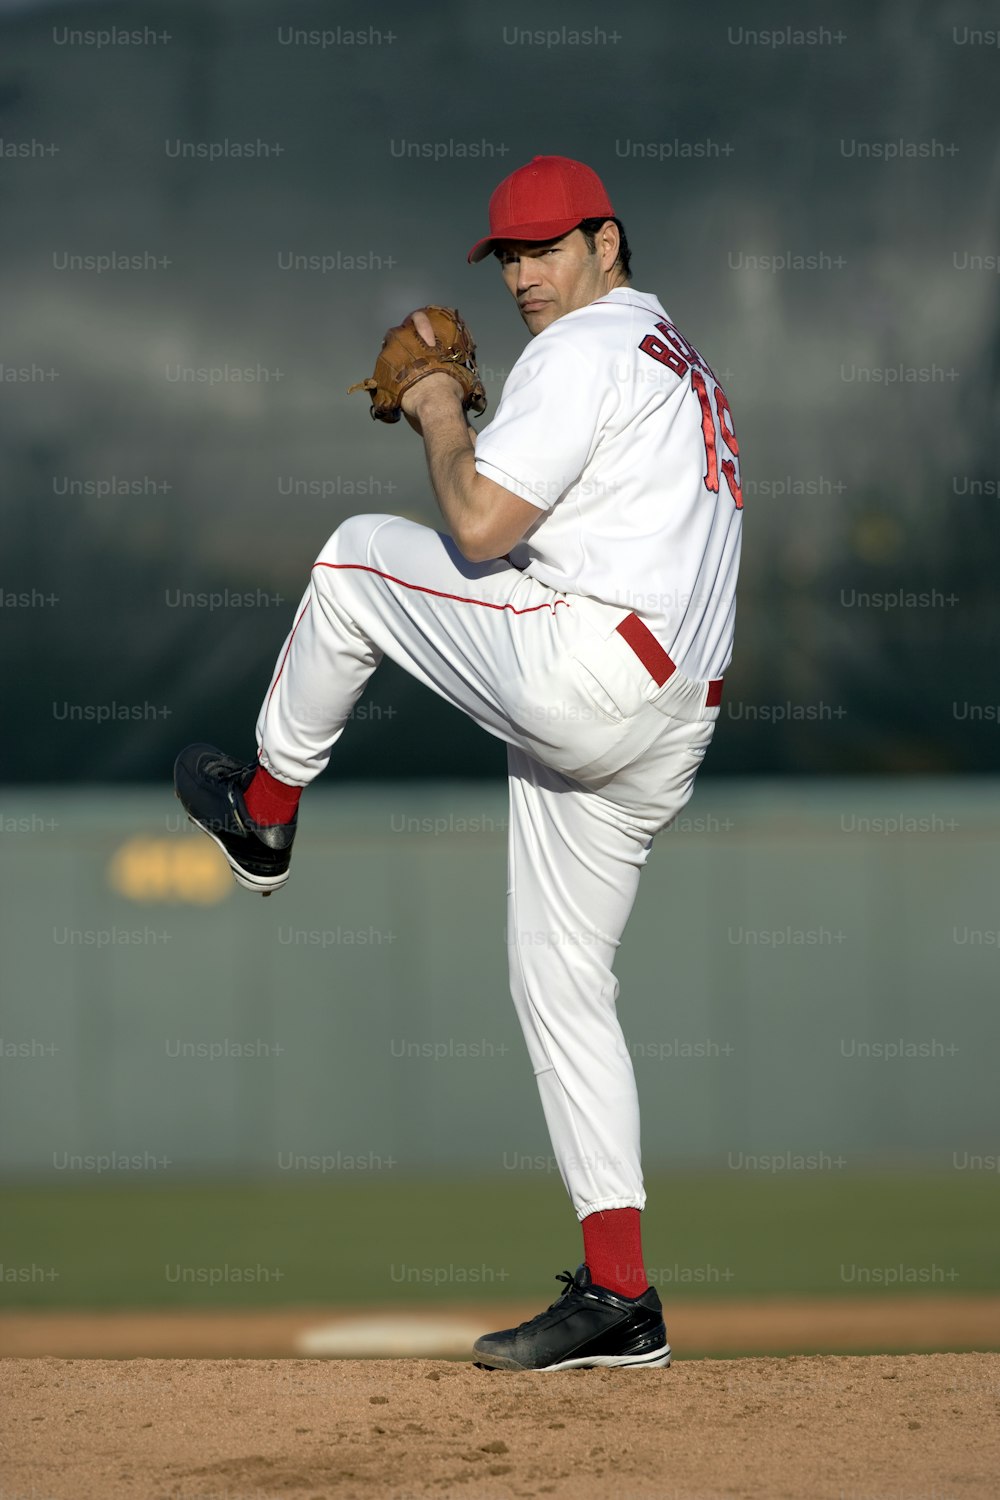 Un hombre con uniforme de béisbol lanzando una pelota de béisbol